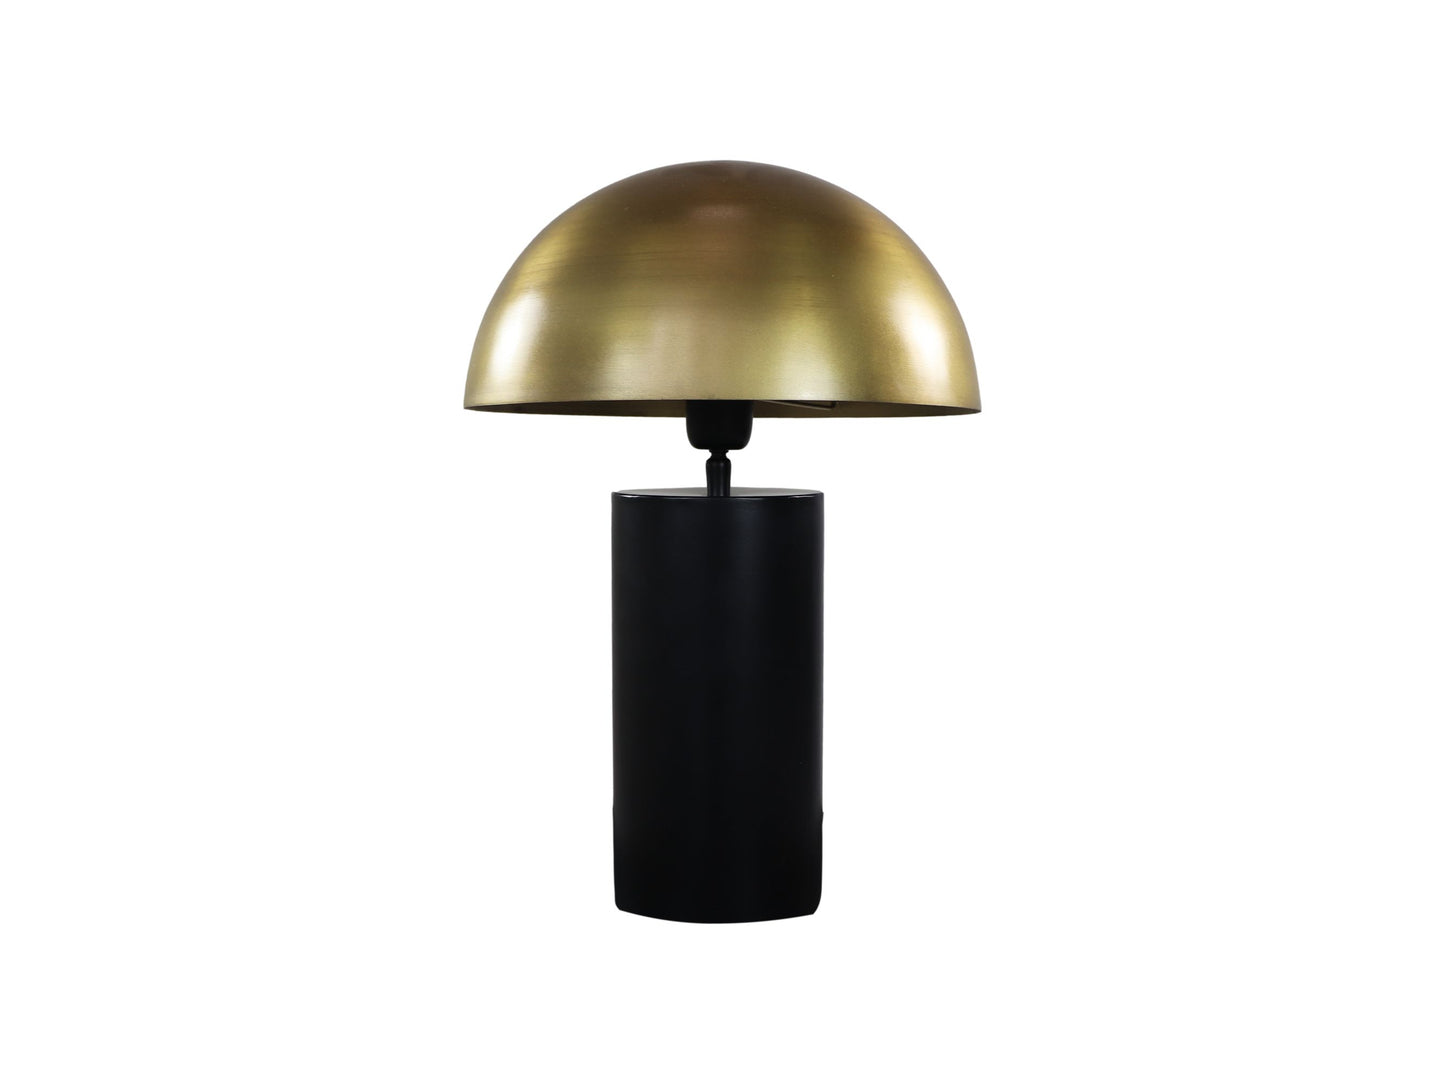 Tafellamp met kap - 30x30x45 - Zwart/goud - Metaal